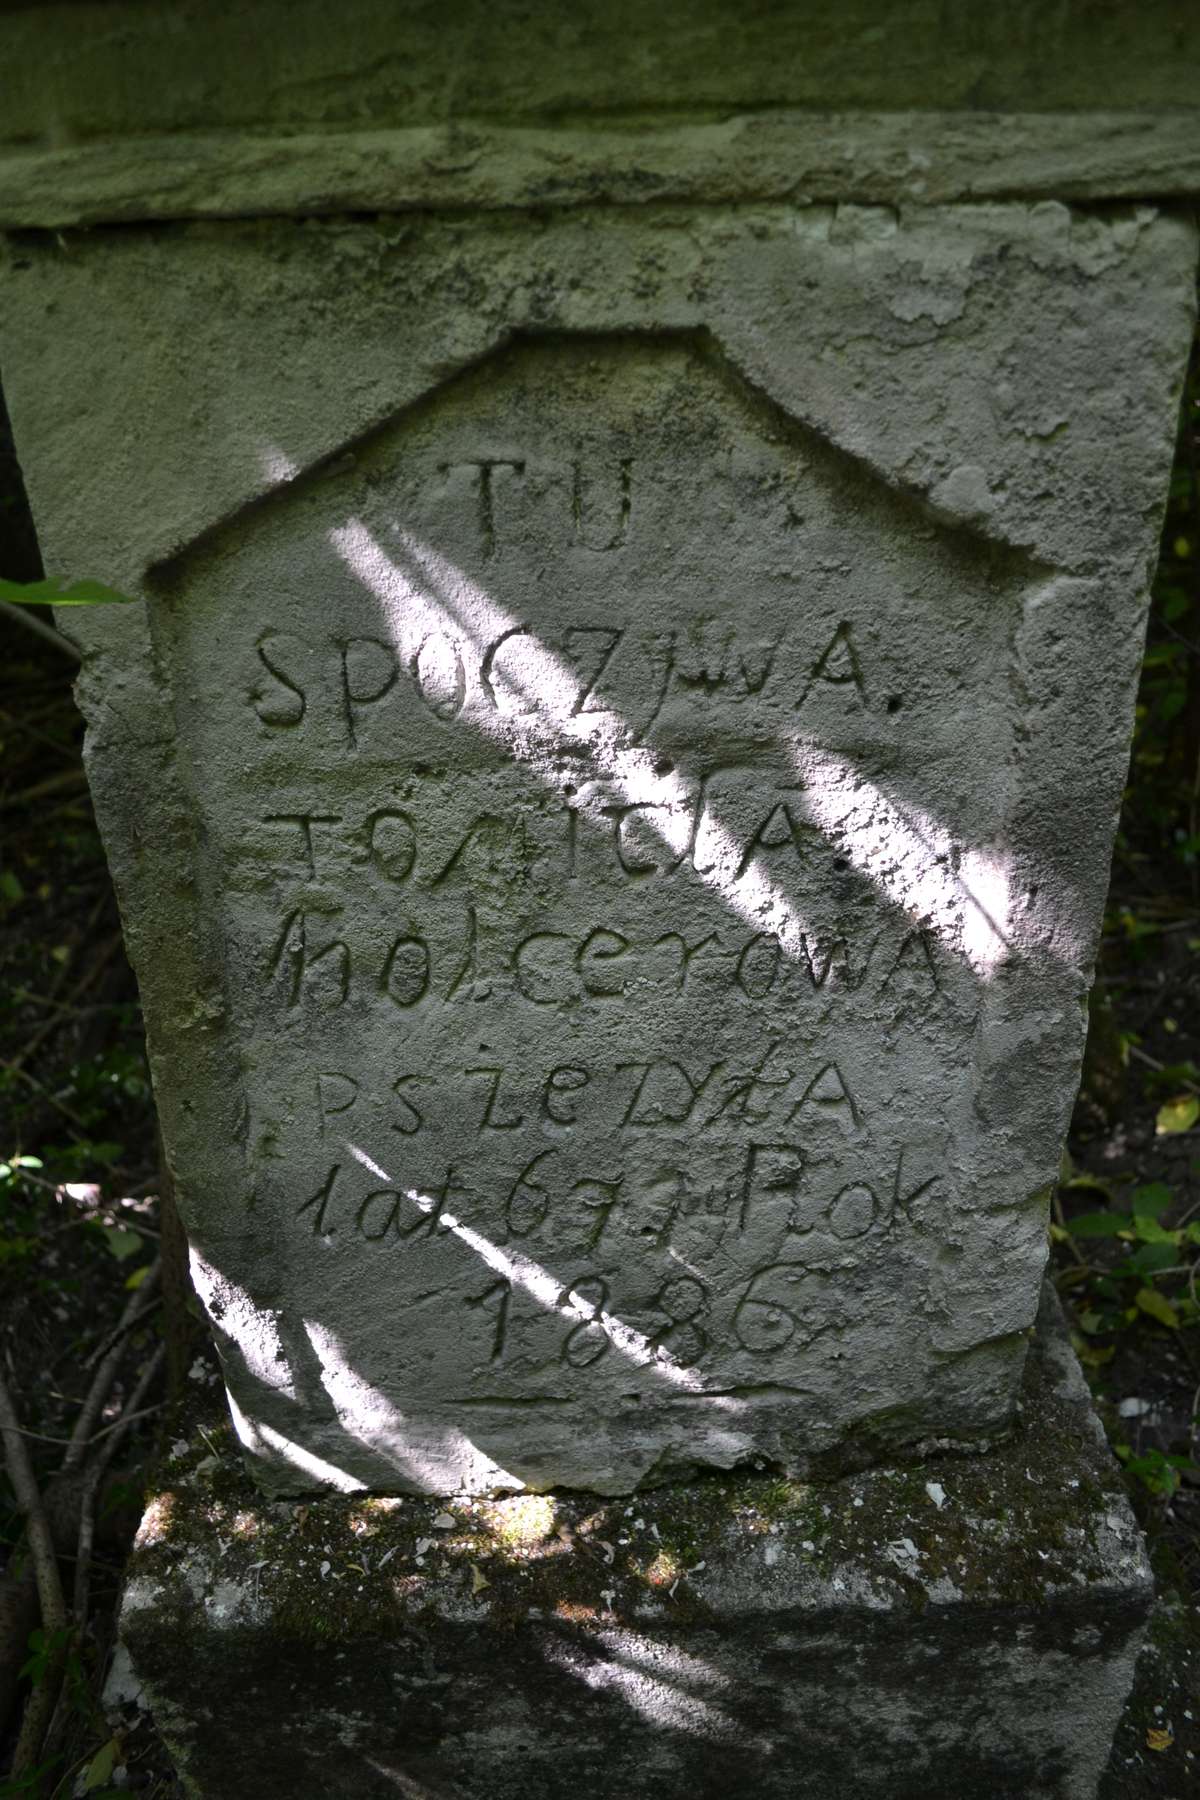 Inscription from Tomira Kolceowa's gravestone, Bucniv cemetery